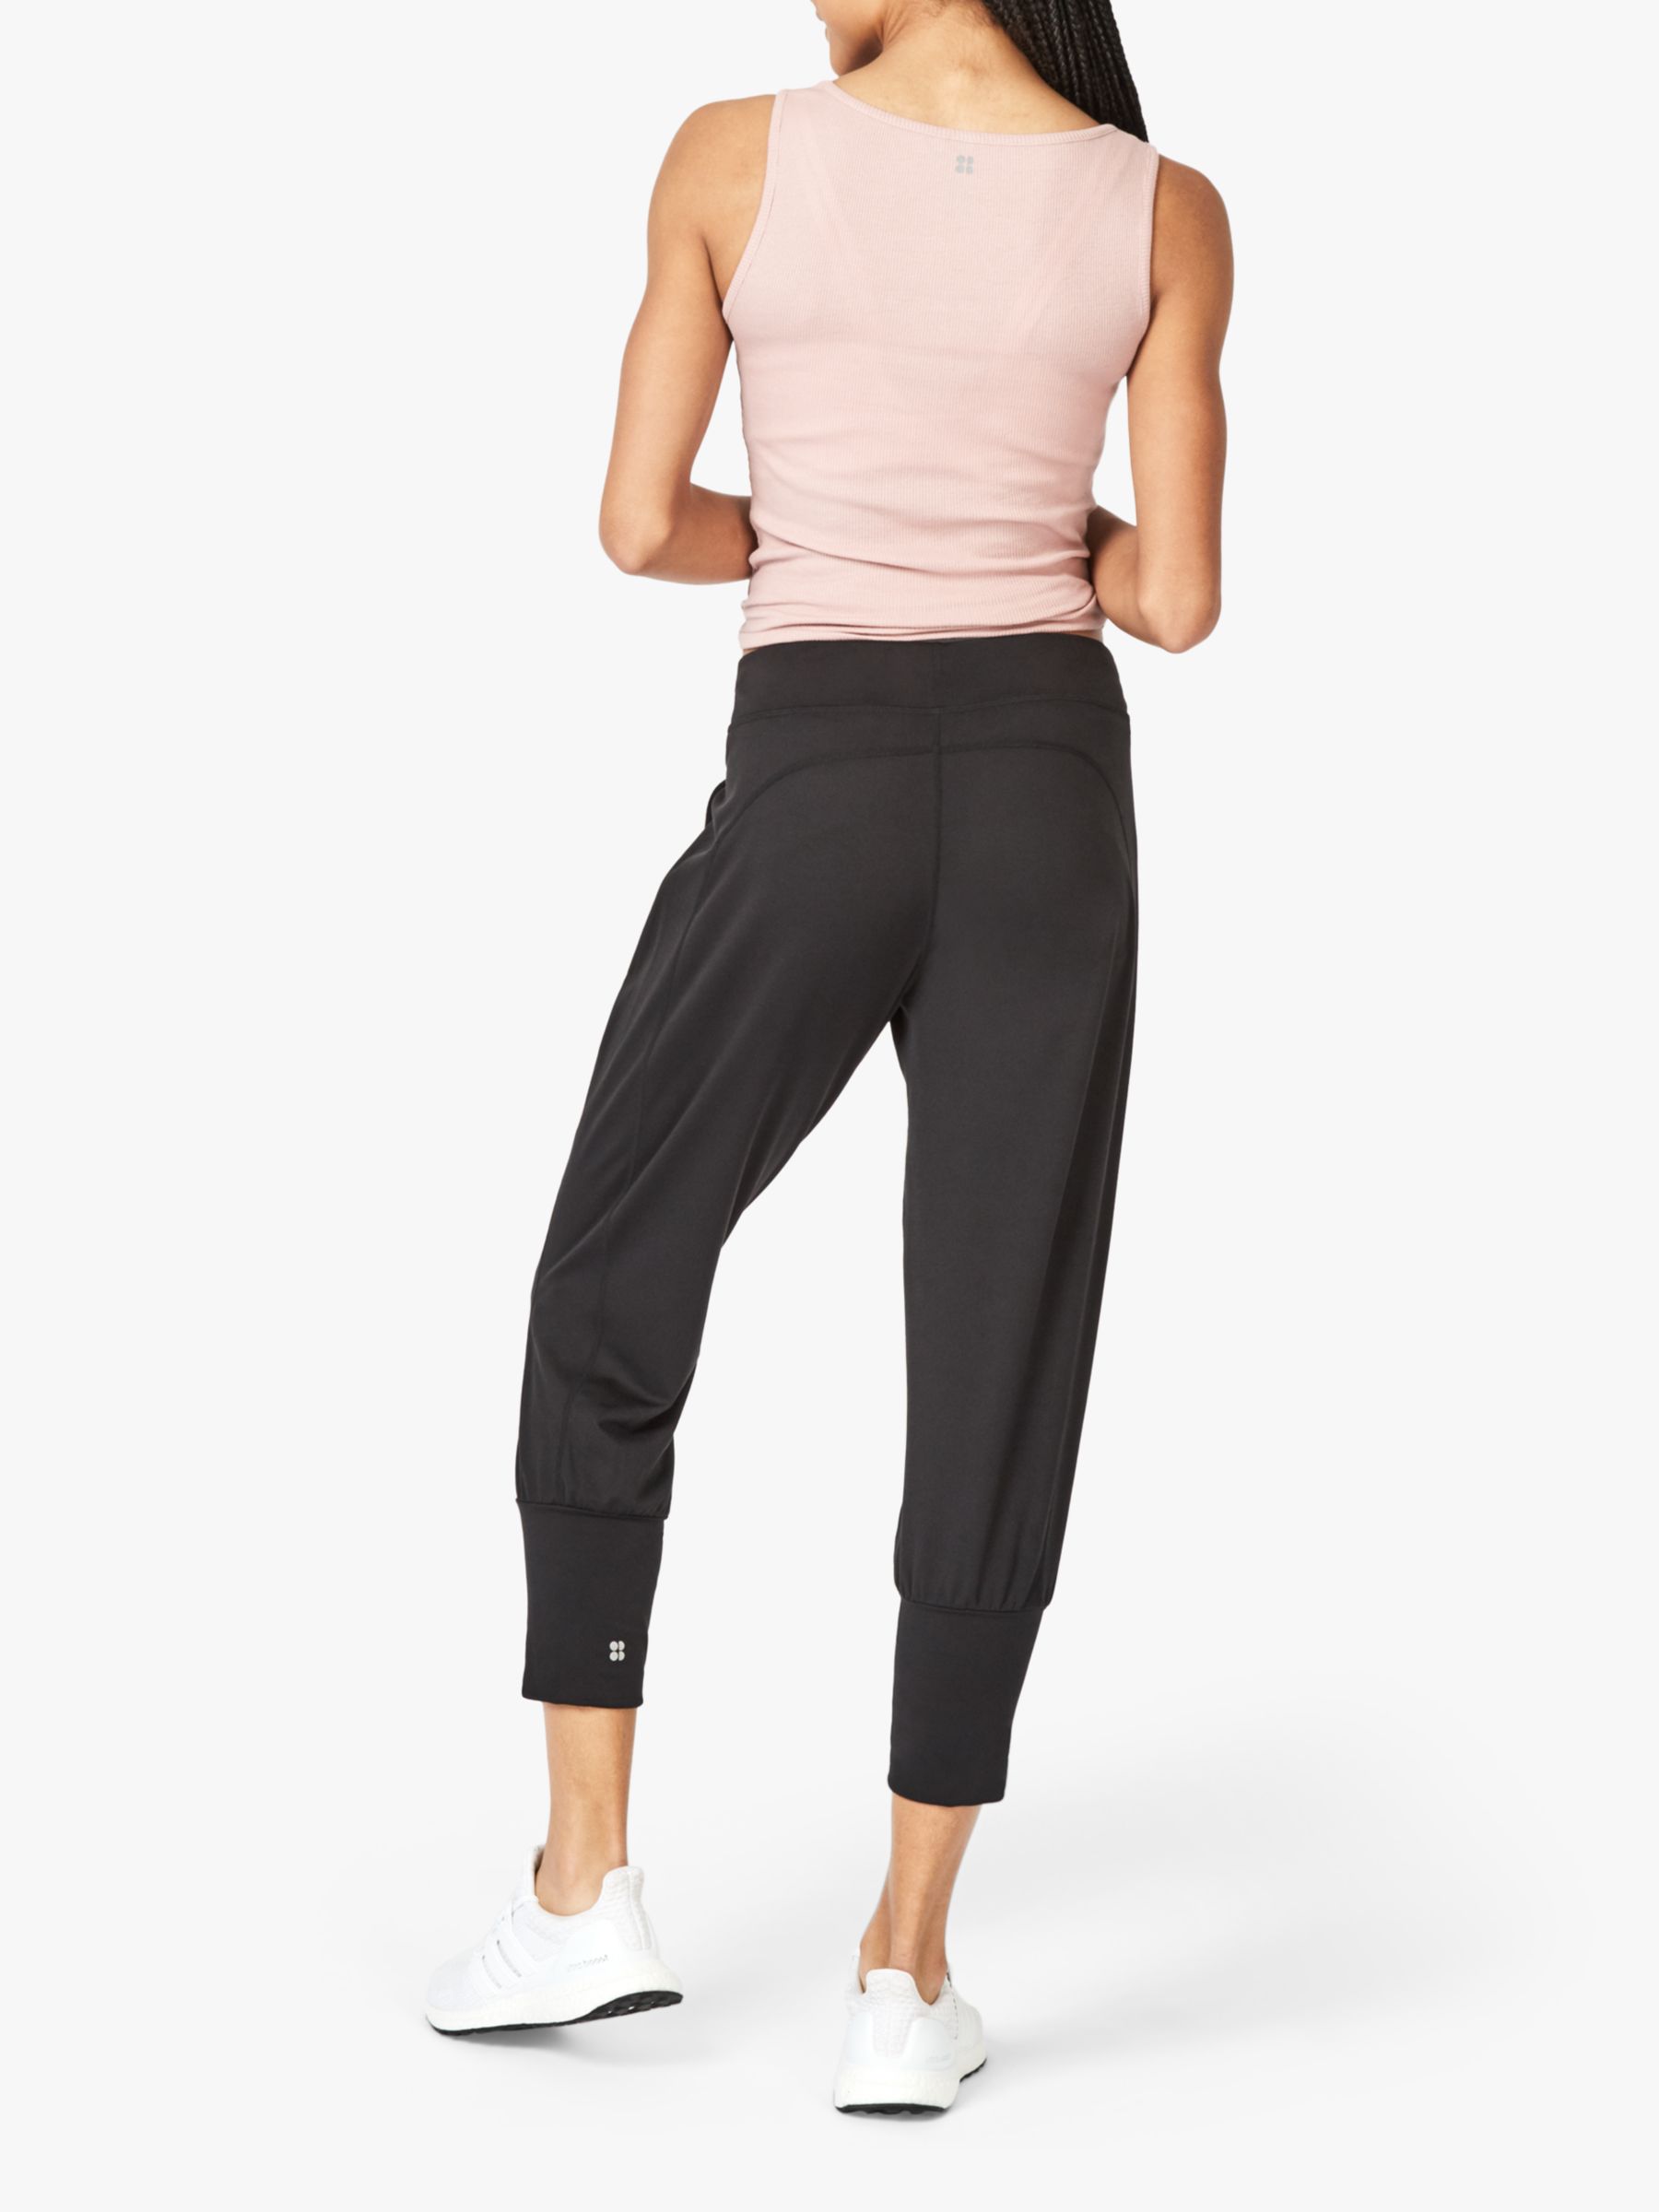 Sweaty Betty Gary Cropped Yoga Pants, Black, XXS